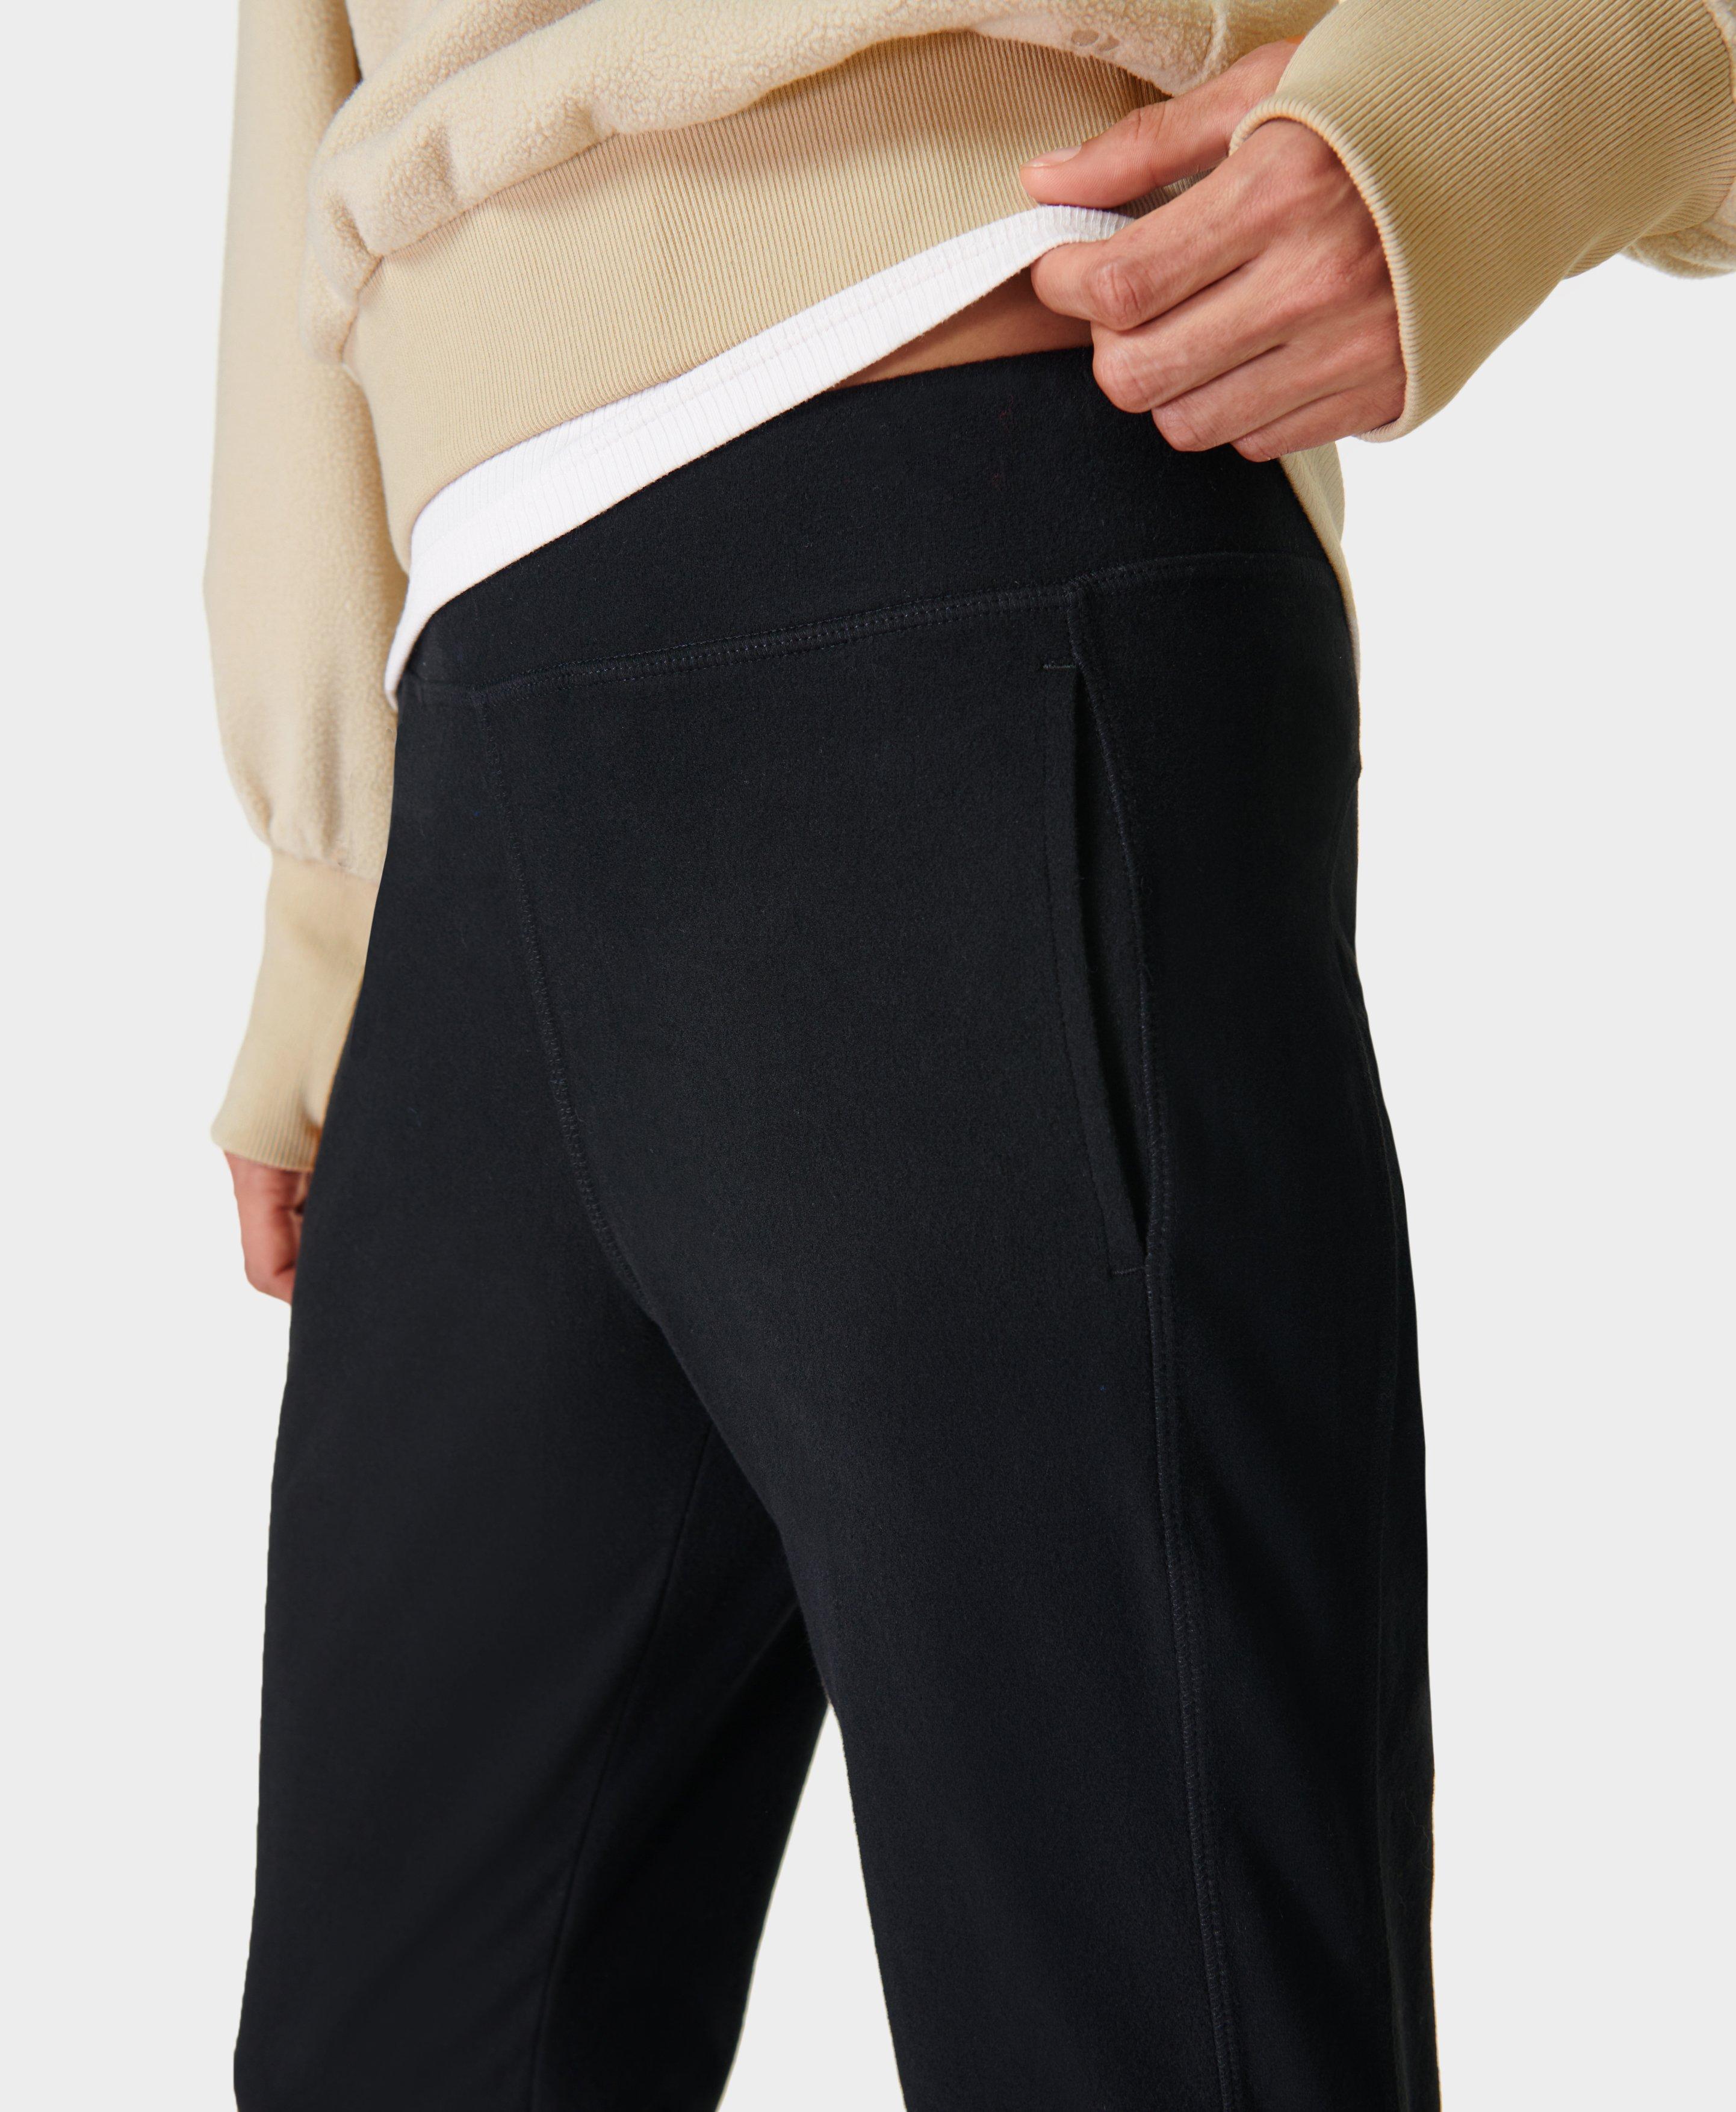 Sweaty Betty Gary Yoga Pants, Black, XXS Short